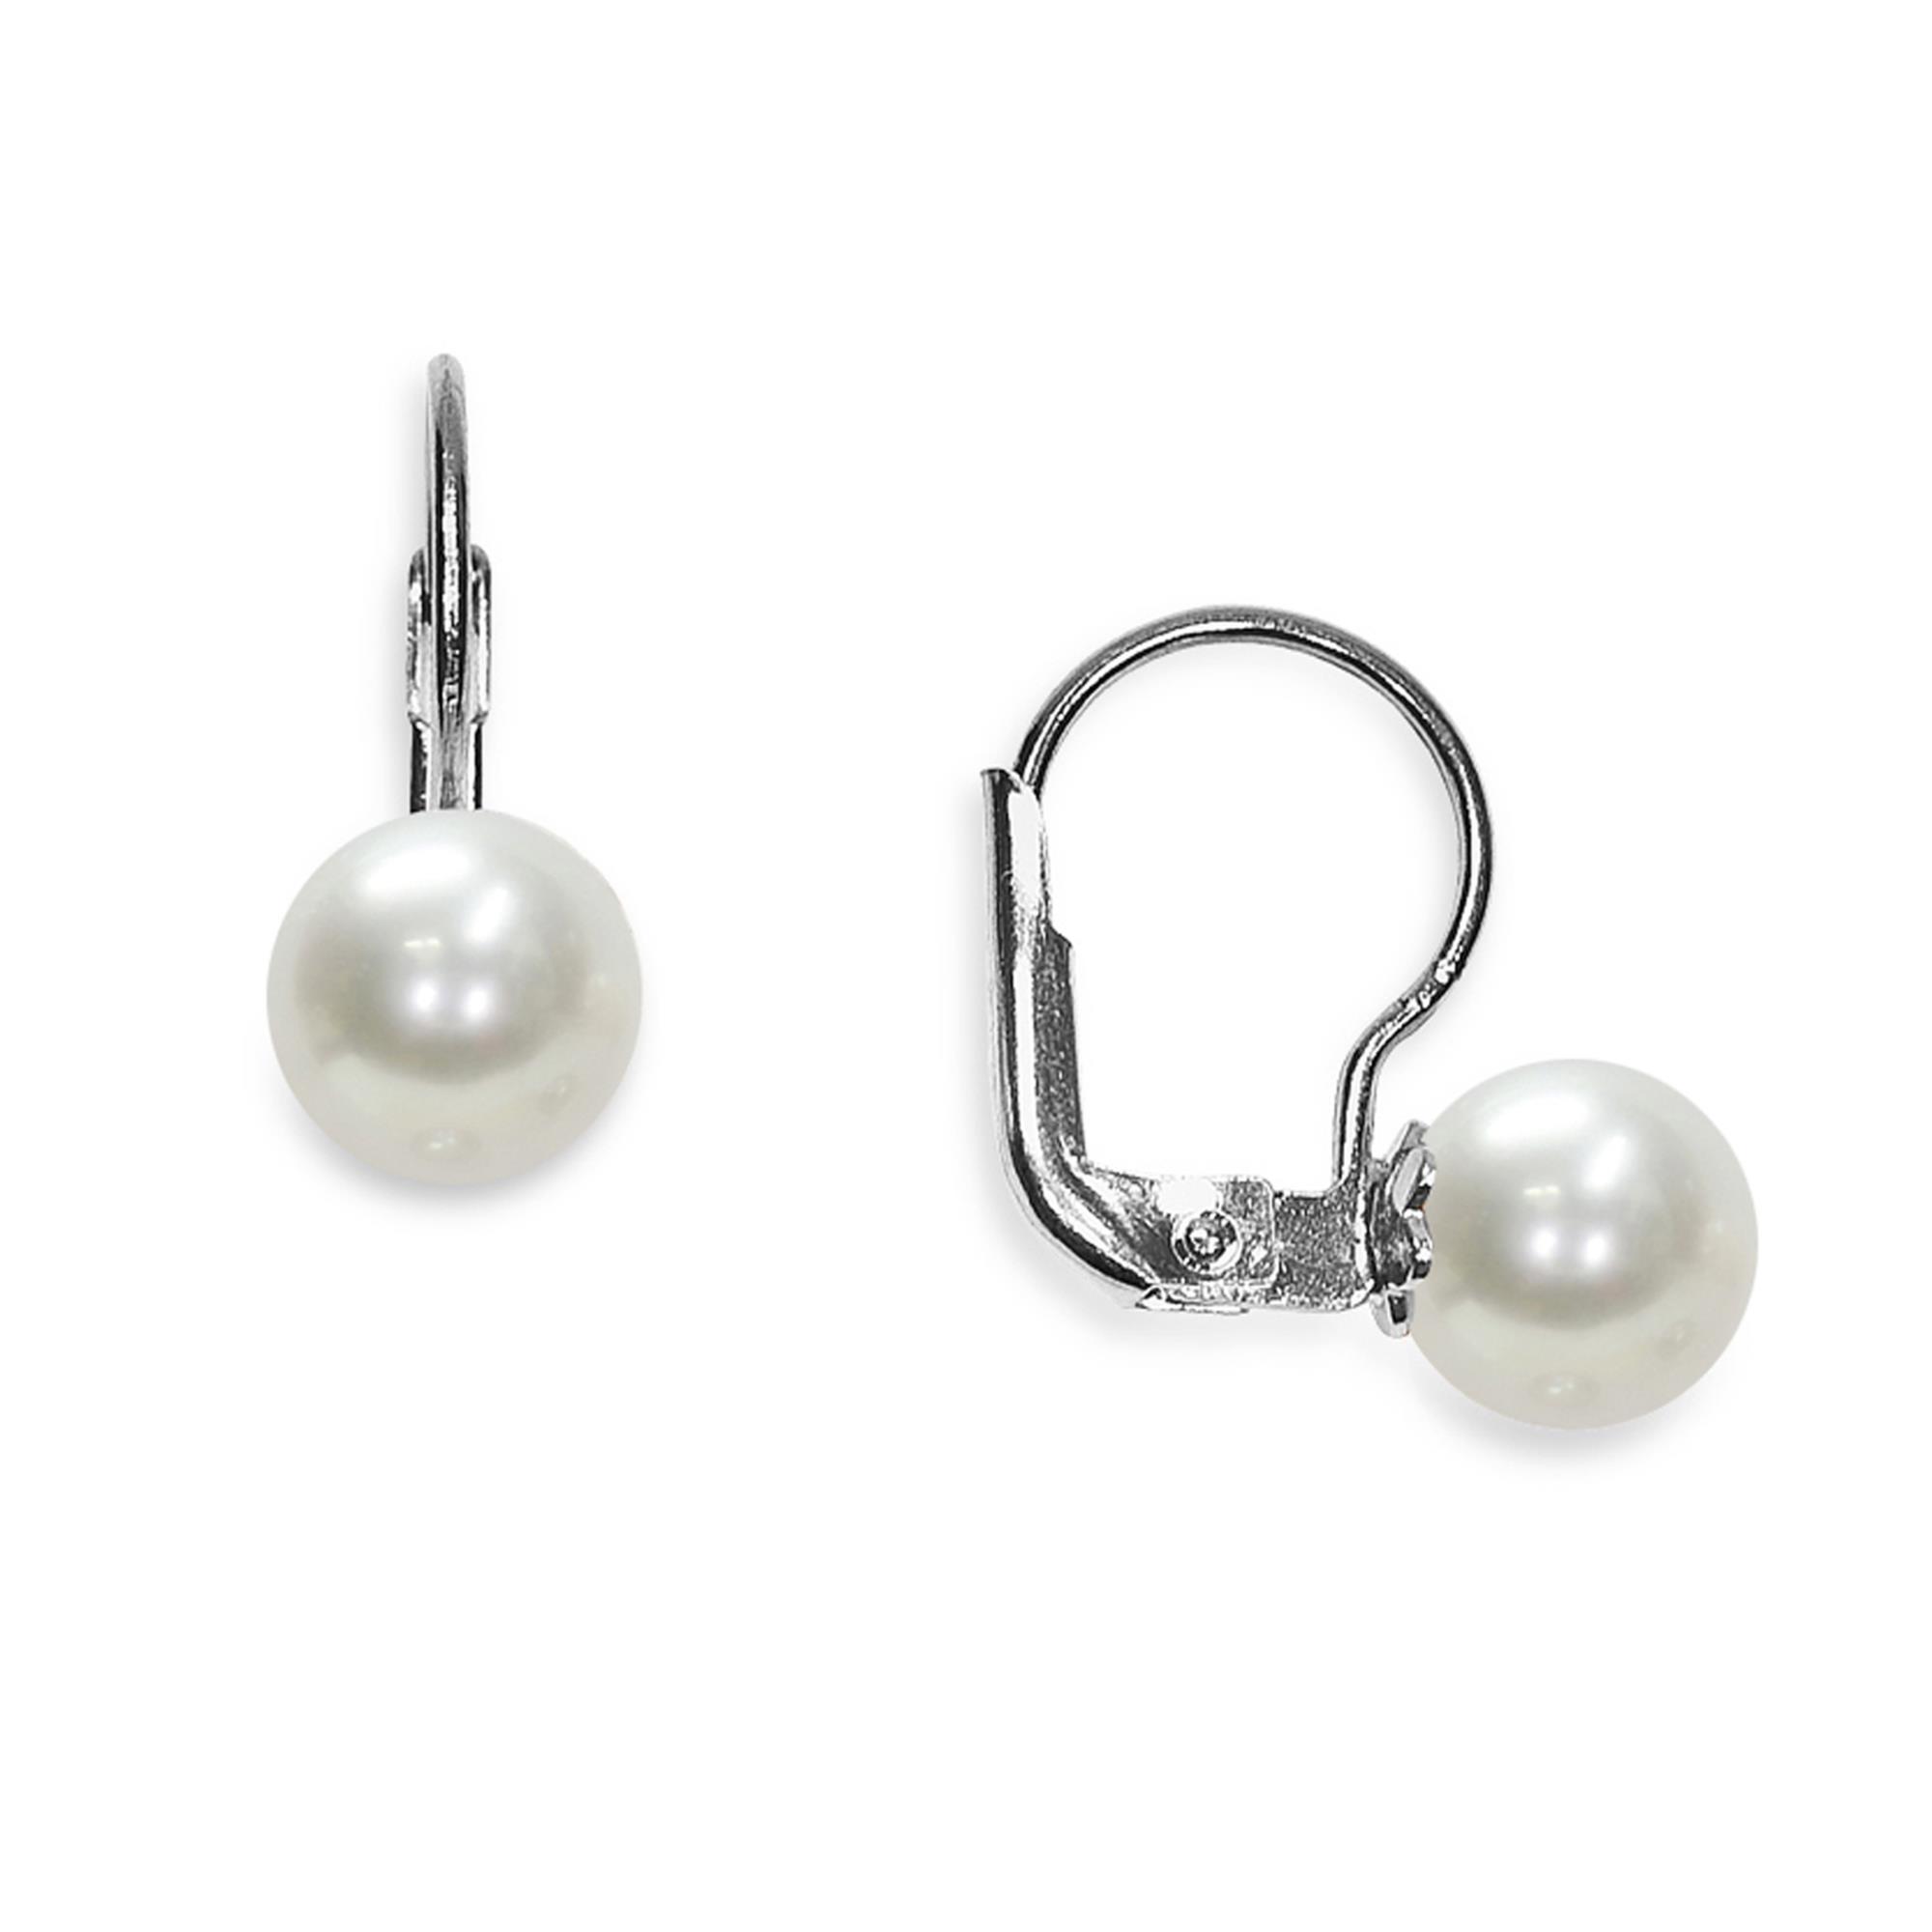 Silver pendant earrings with fresh water pearls - MAYUMI